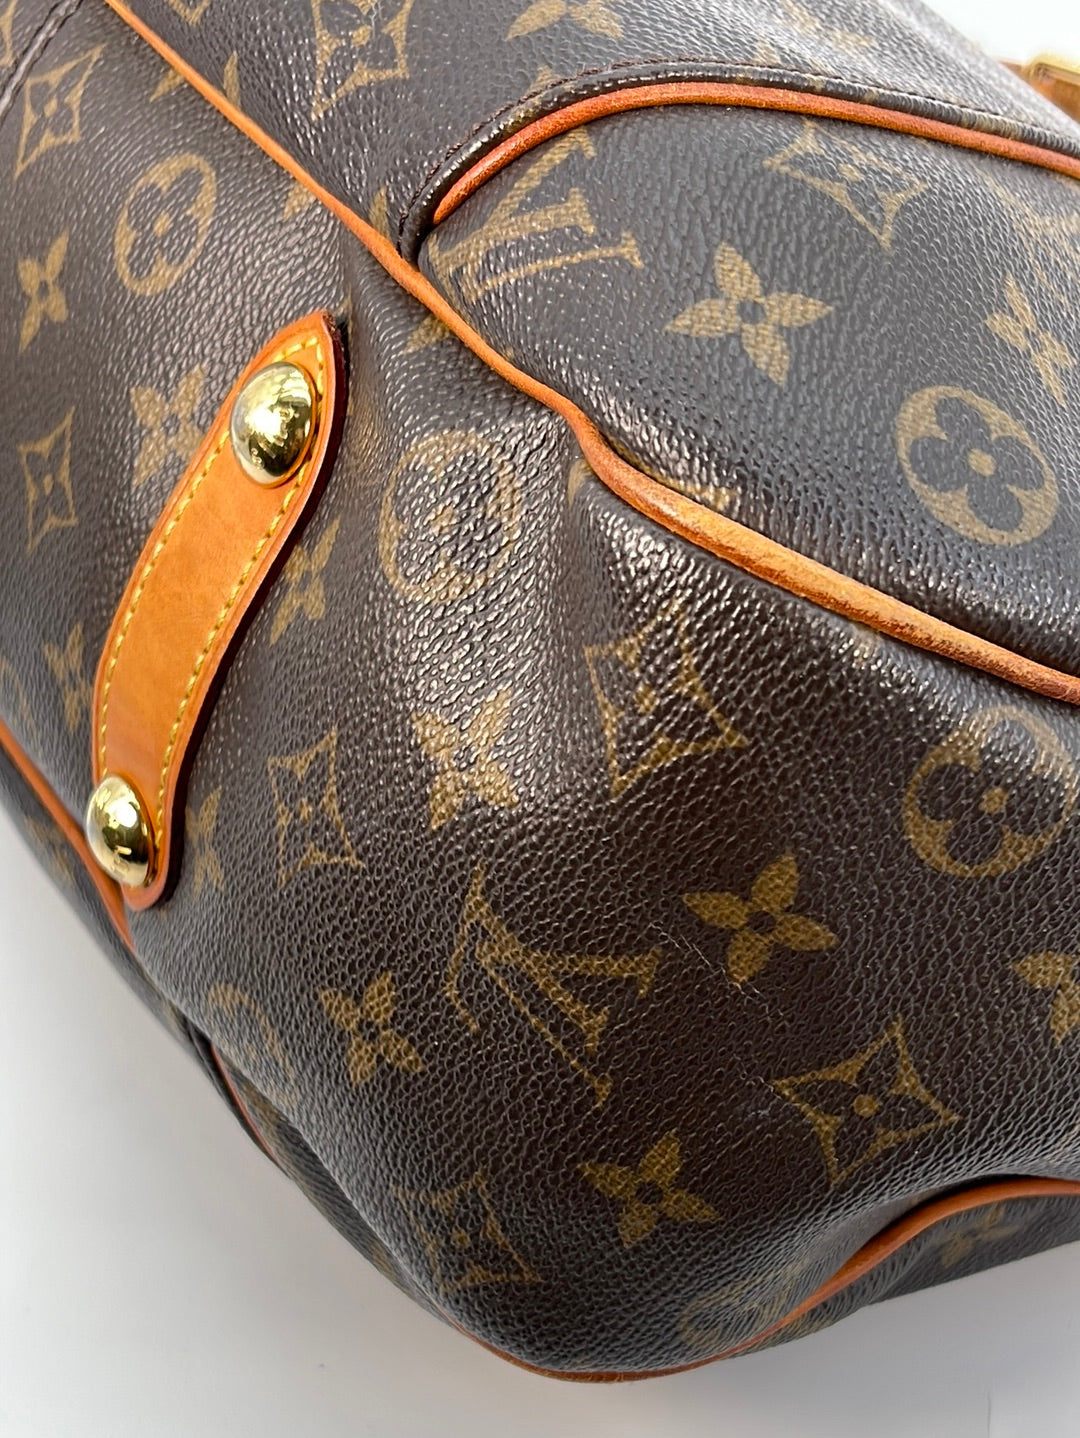 PRELOVED Louis Vuitton Galleria PM Monogram Bag AA1019 033023 - $300 OFF FLASH SALE